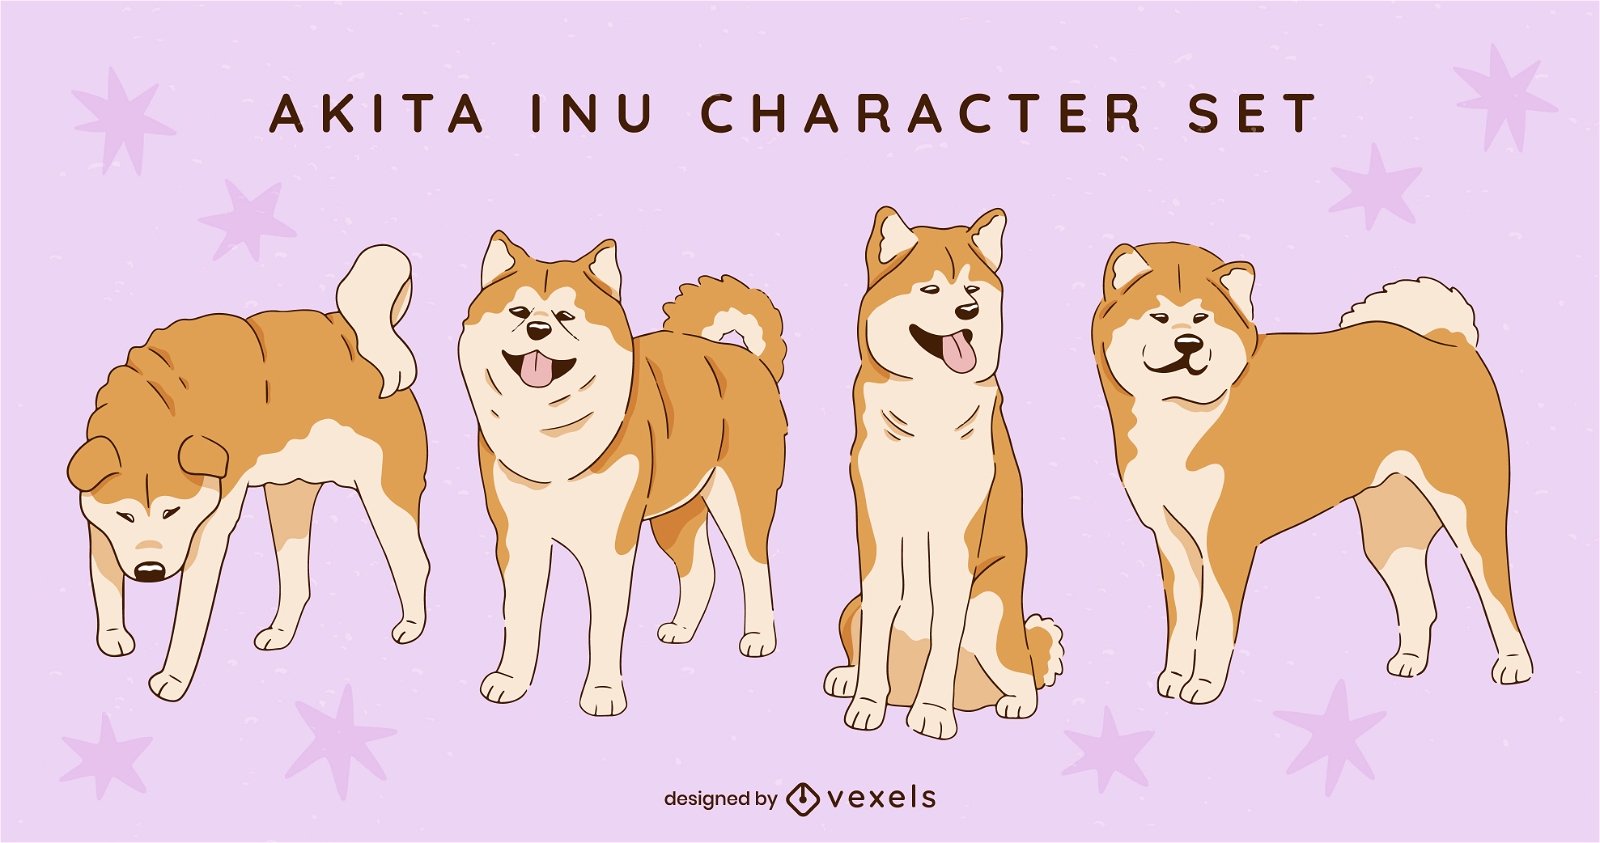 Akita Inu dog character set